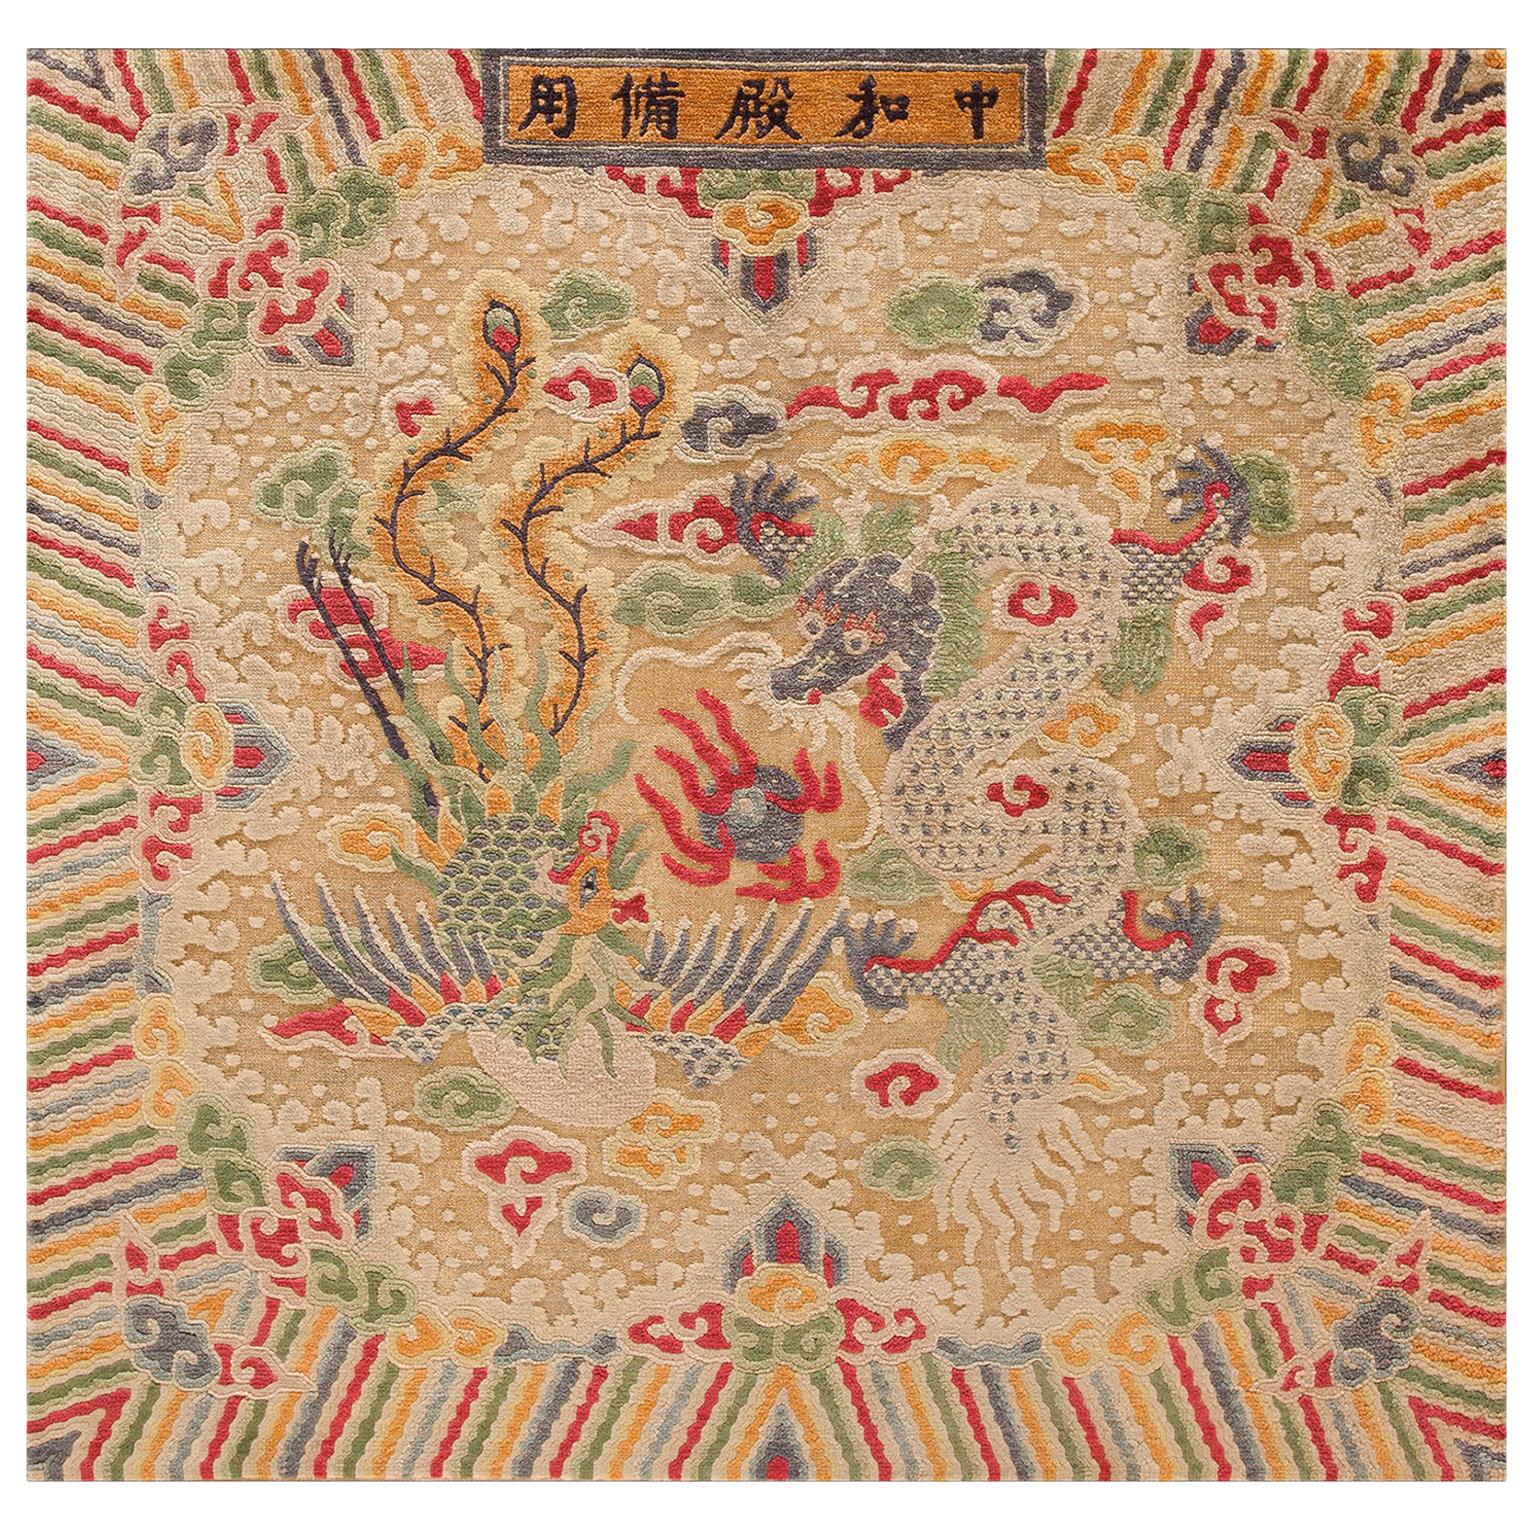 Early 20th Century Chinese Silk & Metallic Thread Carpet ( 4' x 4'-122 x 122 cm)